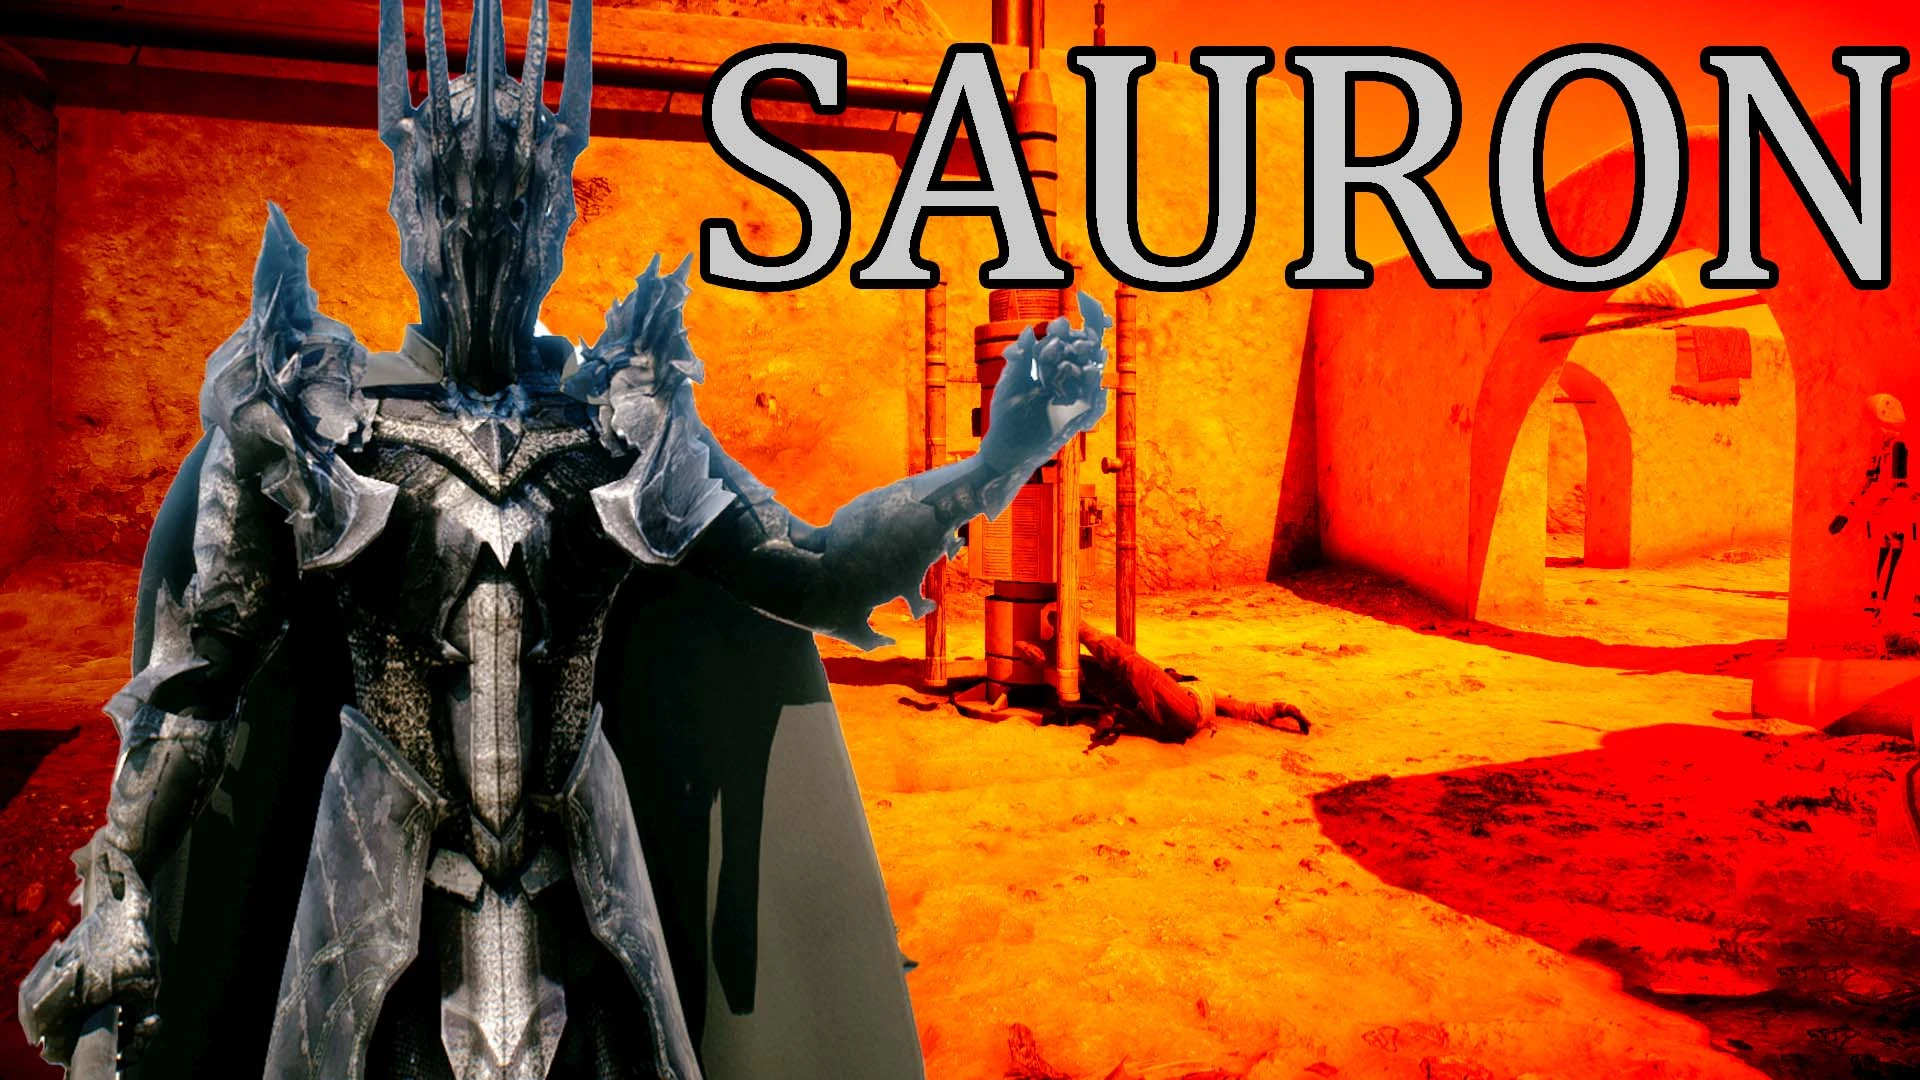 Sauron For Darth Vader at Star Wars: Battlefront II (2017) Nexus - Mods ...